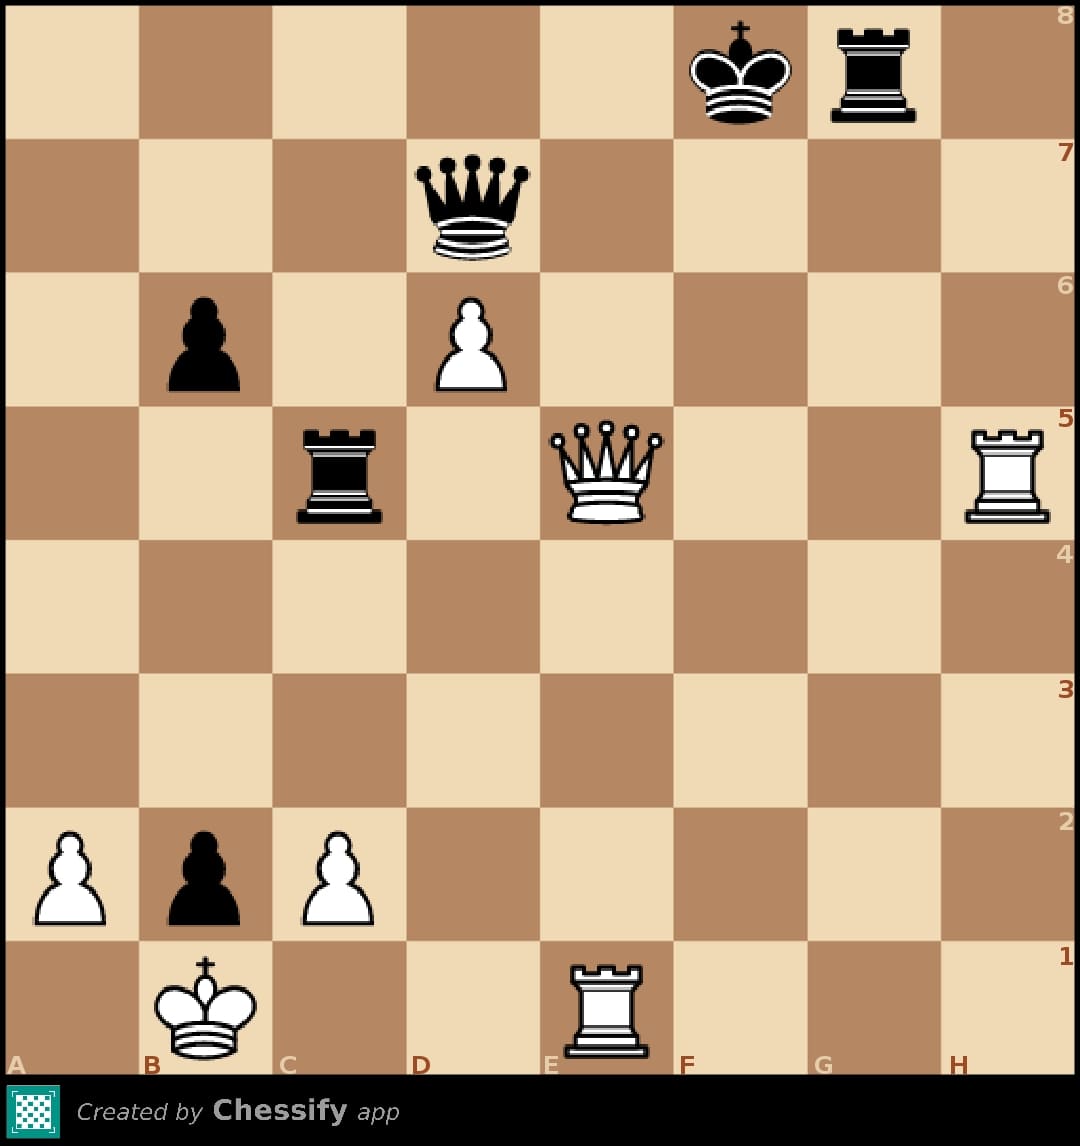 Carlsen vs Grischuk